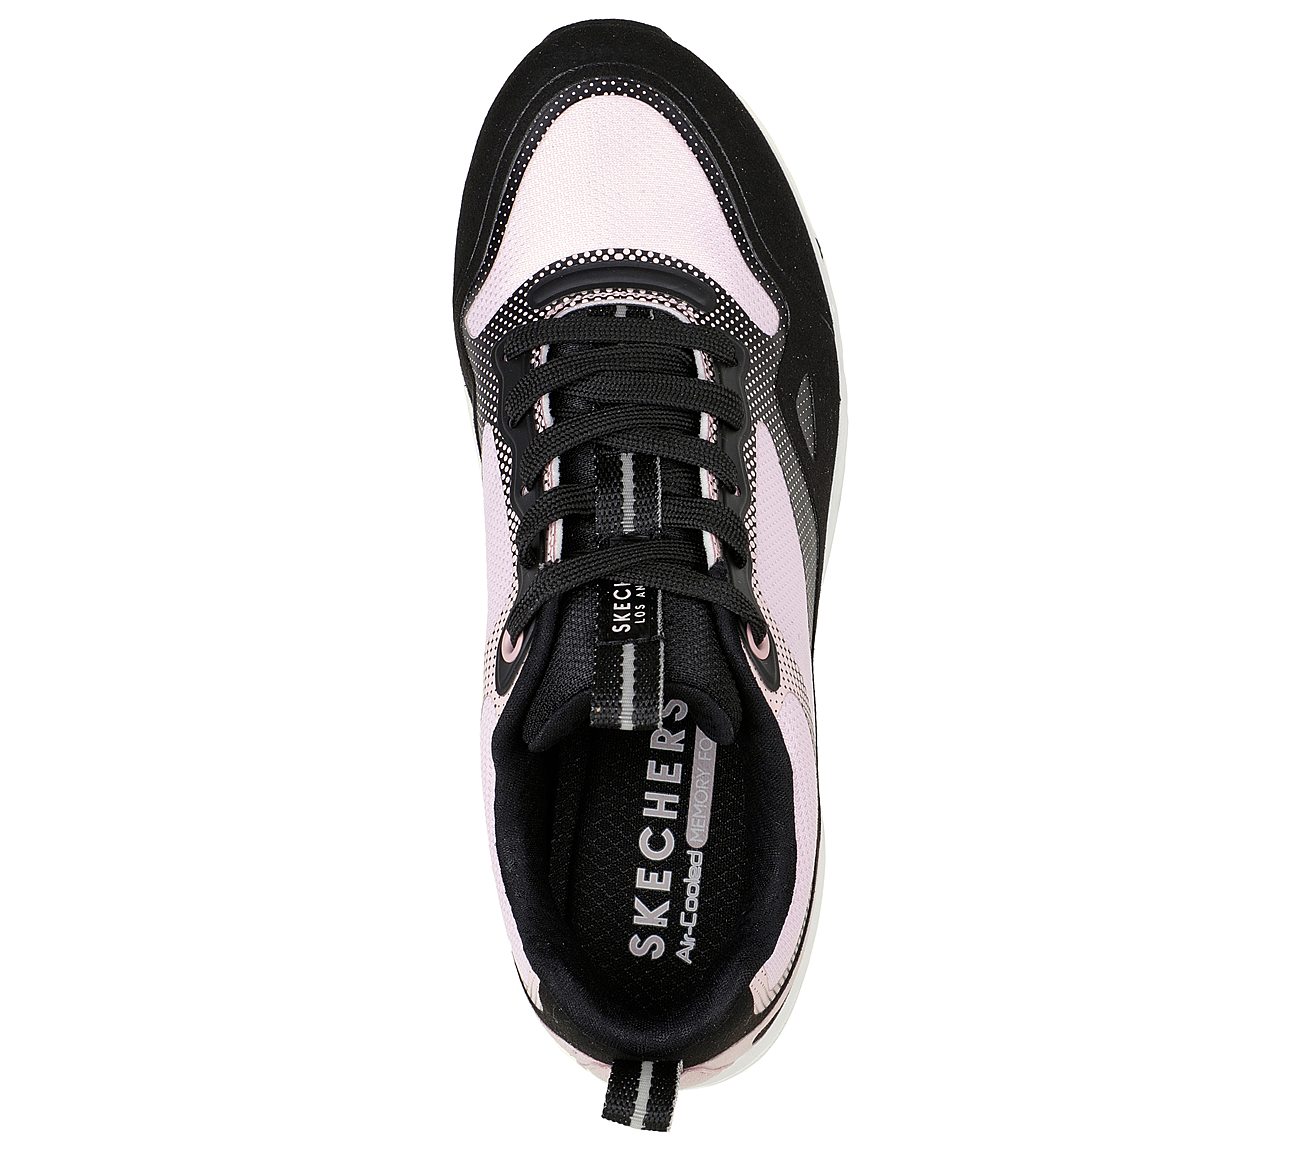 UNO 2 - MAD AIR, BLACK/LIGHT PINK Footwear Top View